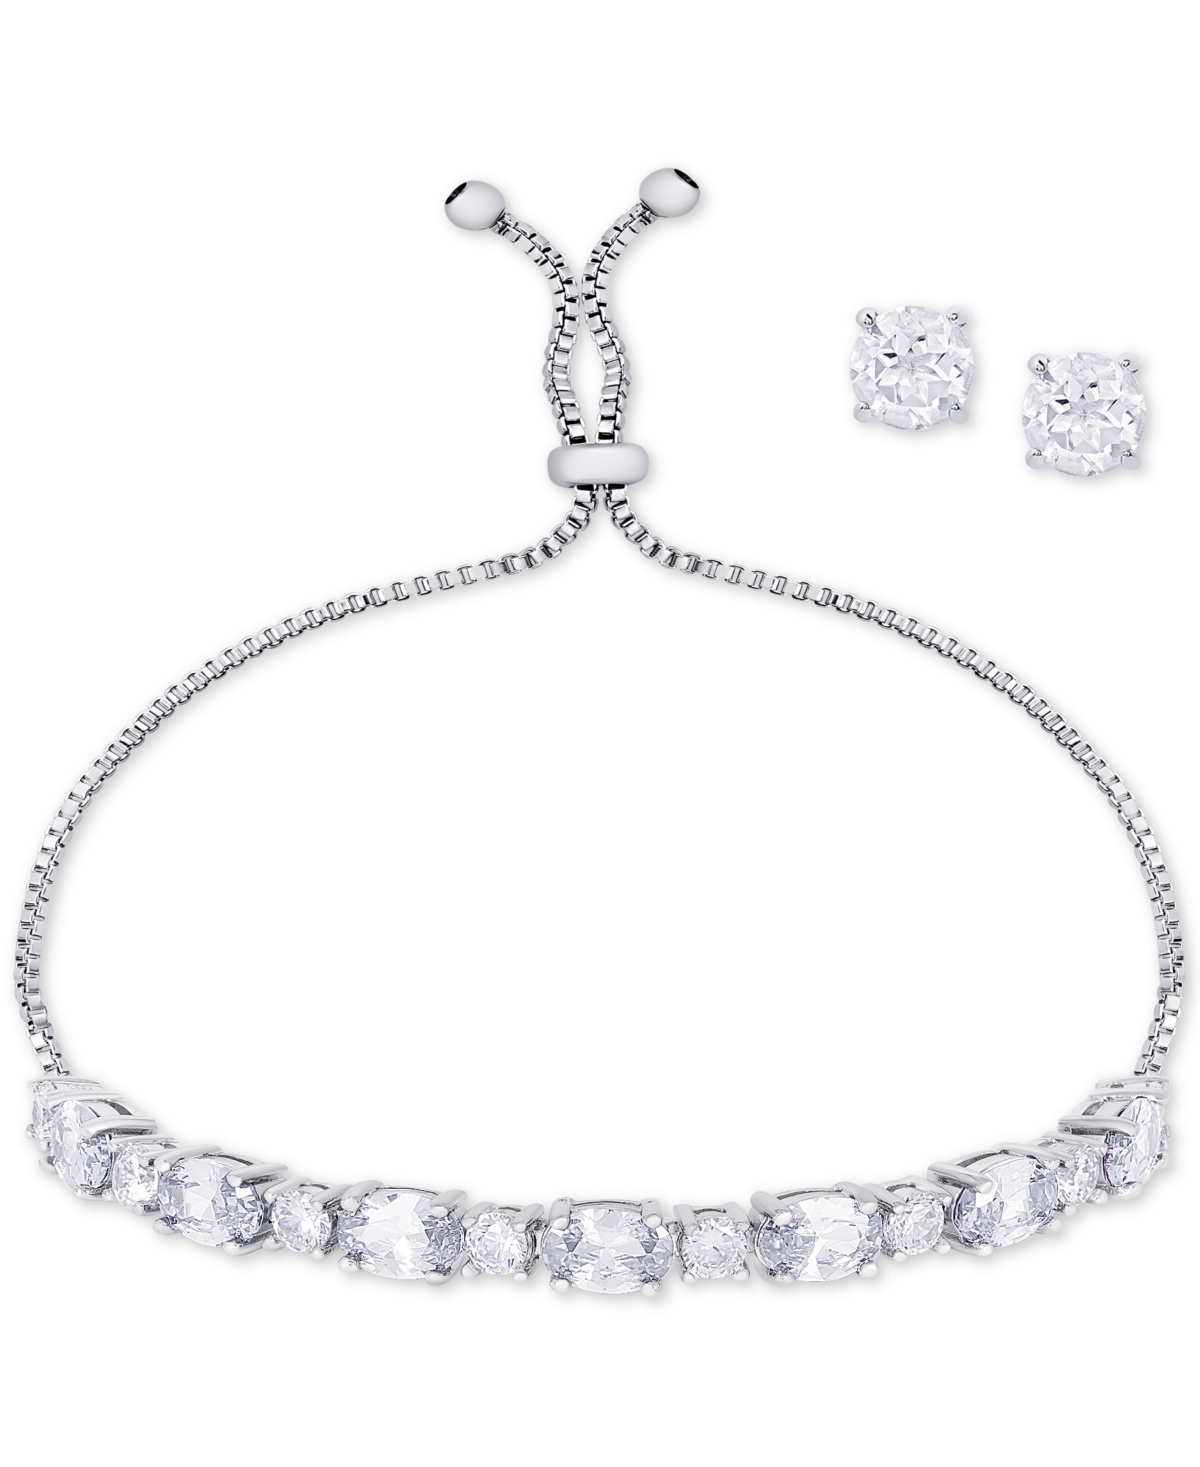 Clear Cubic Zirconia Slider Bracelet & Cubic Zirconia Stud Earrings Set in Silver-Plate, April Birthstone - April/Clear